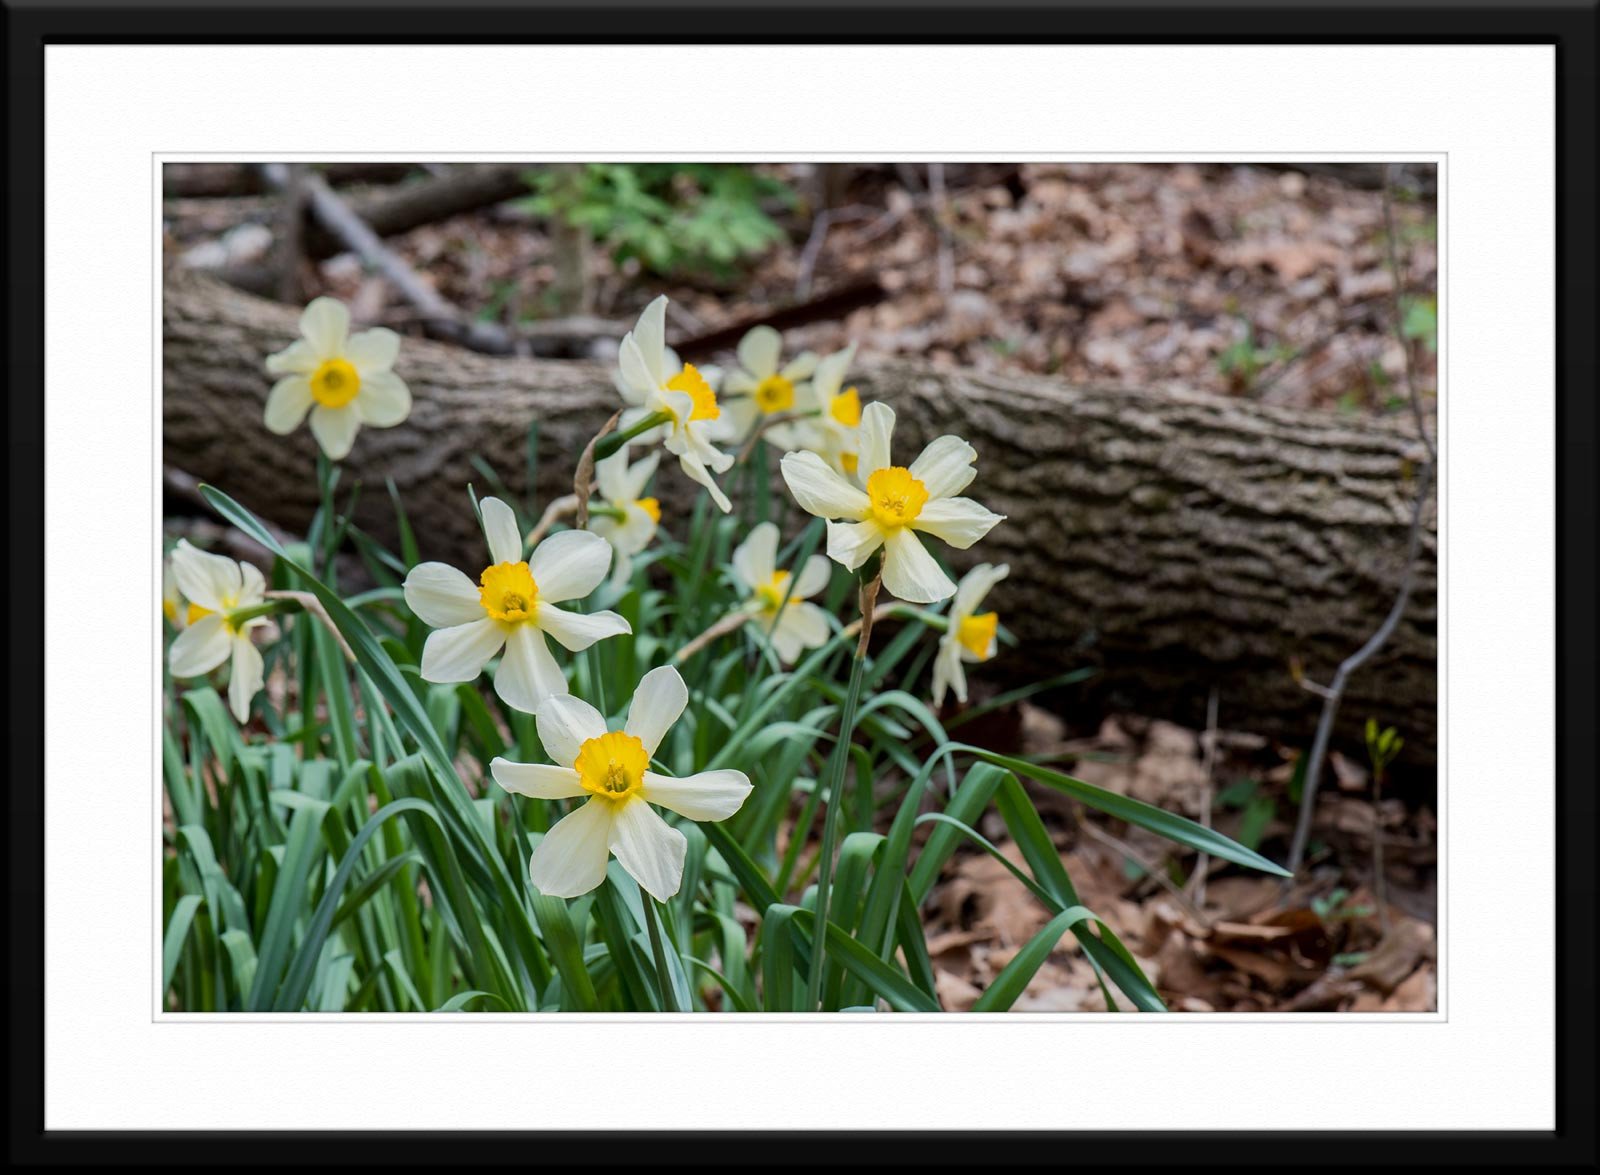 Daffodils with log photograph